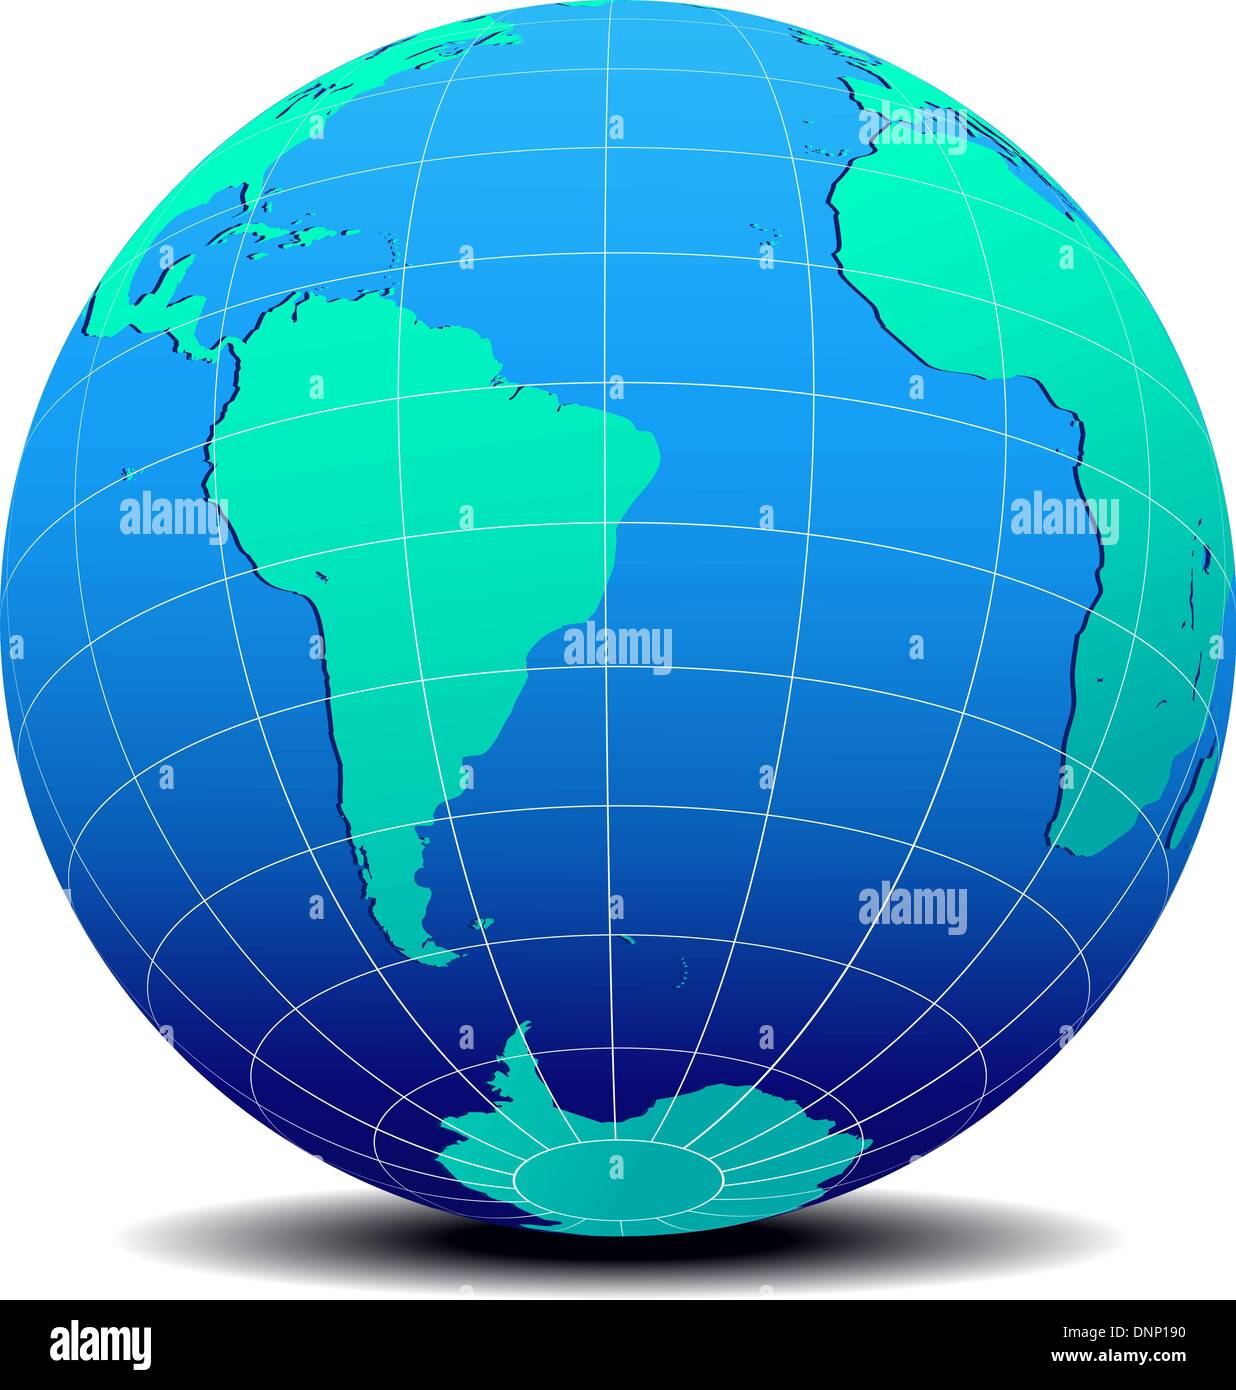 Vektor-Kartensymbol der Welt in Globe-Form - Südamerika Stock Vektor